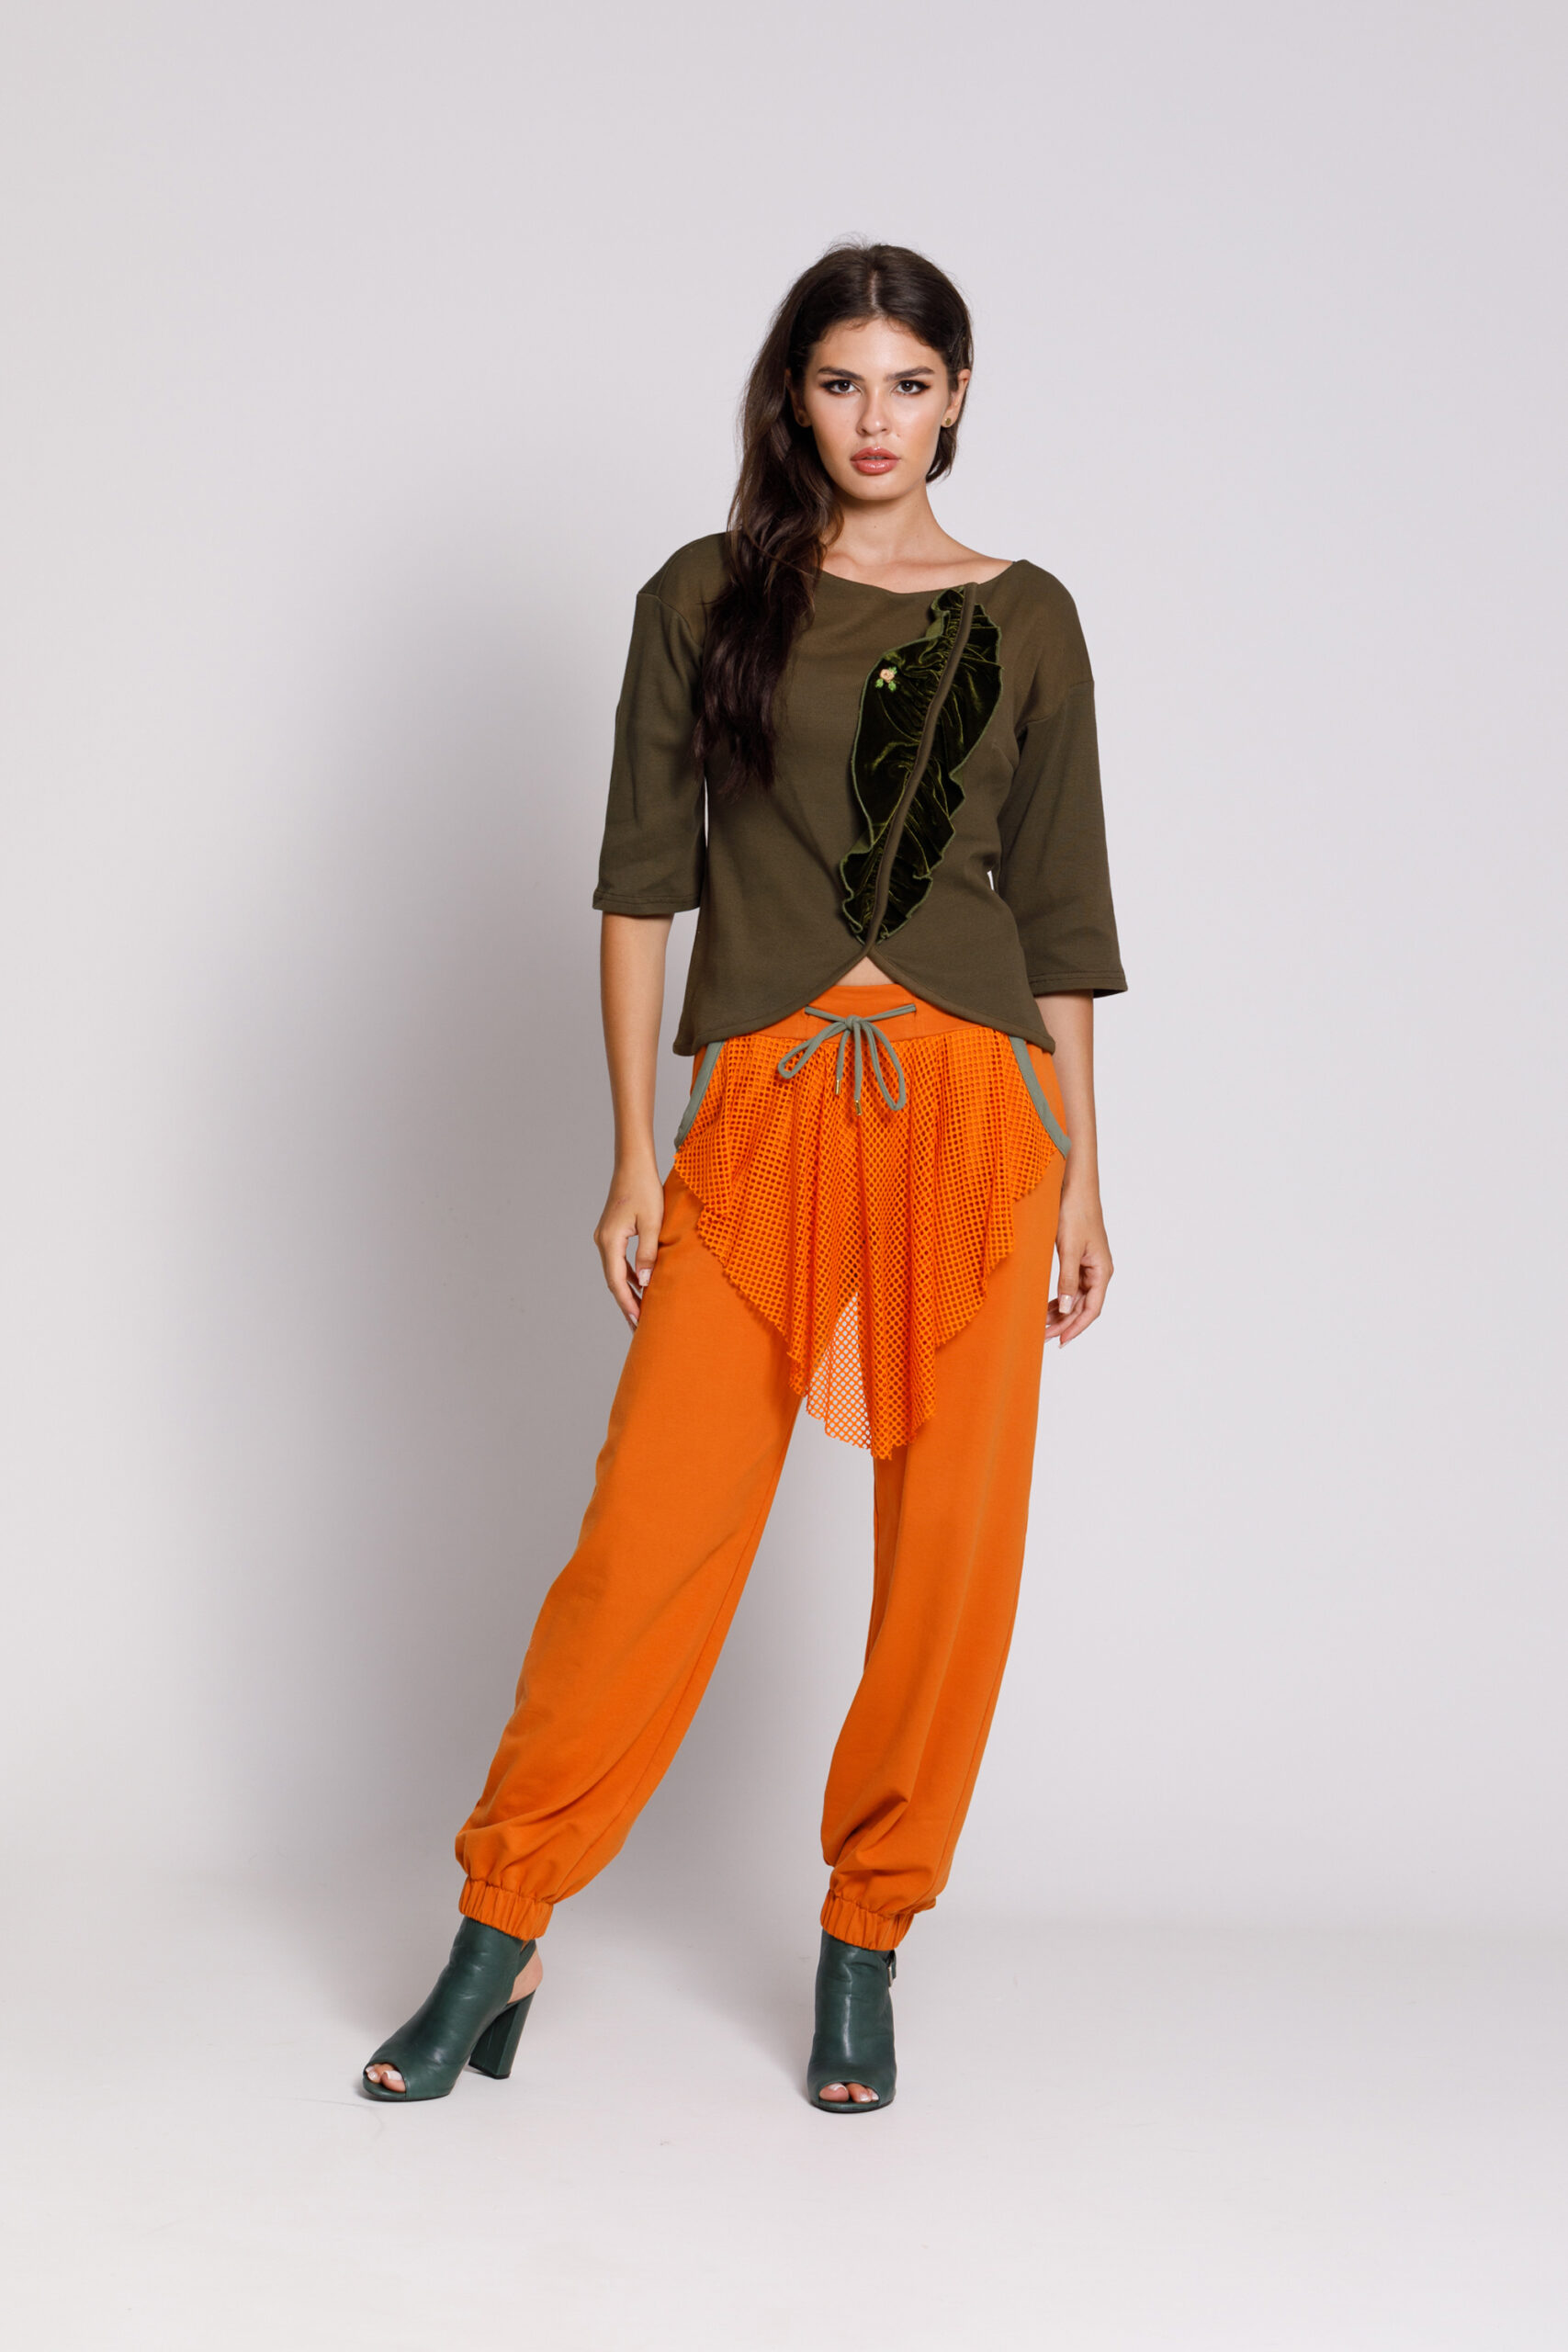 OLARIS orange plush pants with mesh lining. Natural fabrics, original design, handmade embroidery